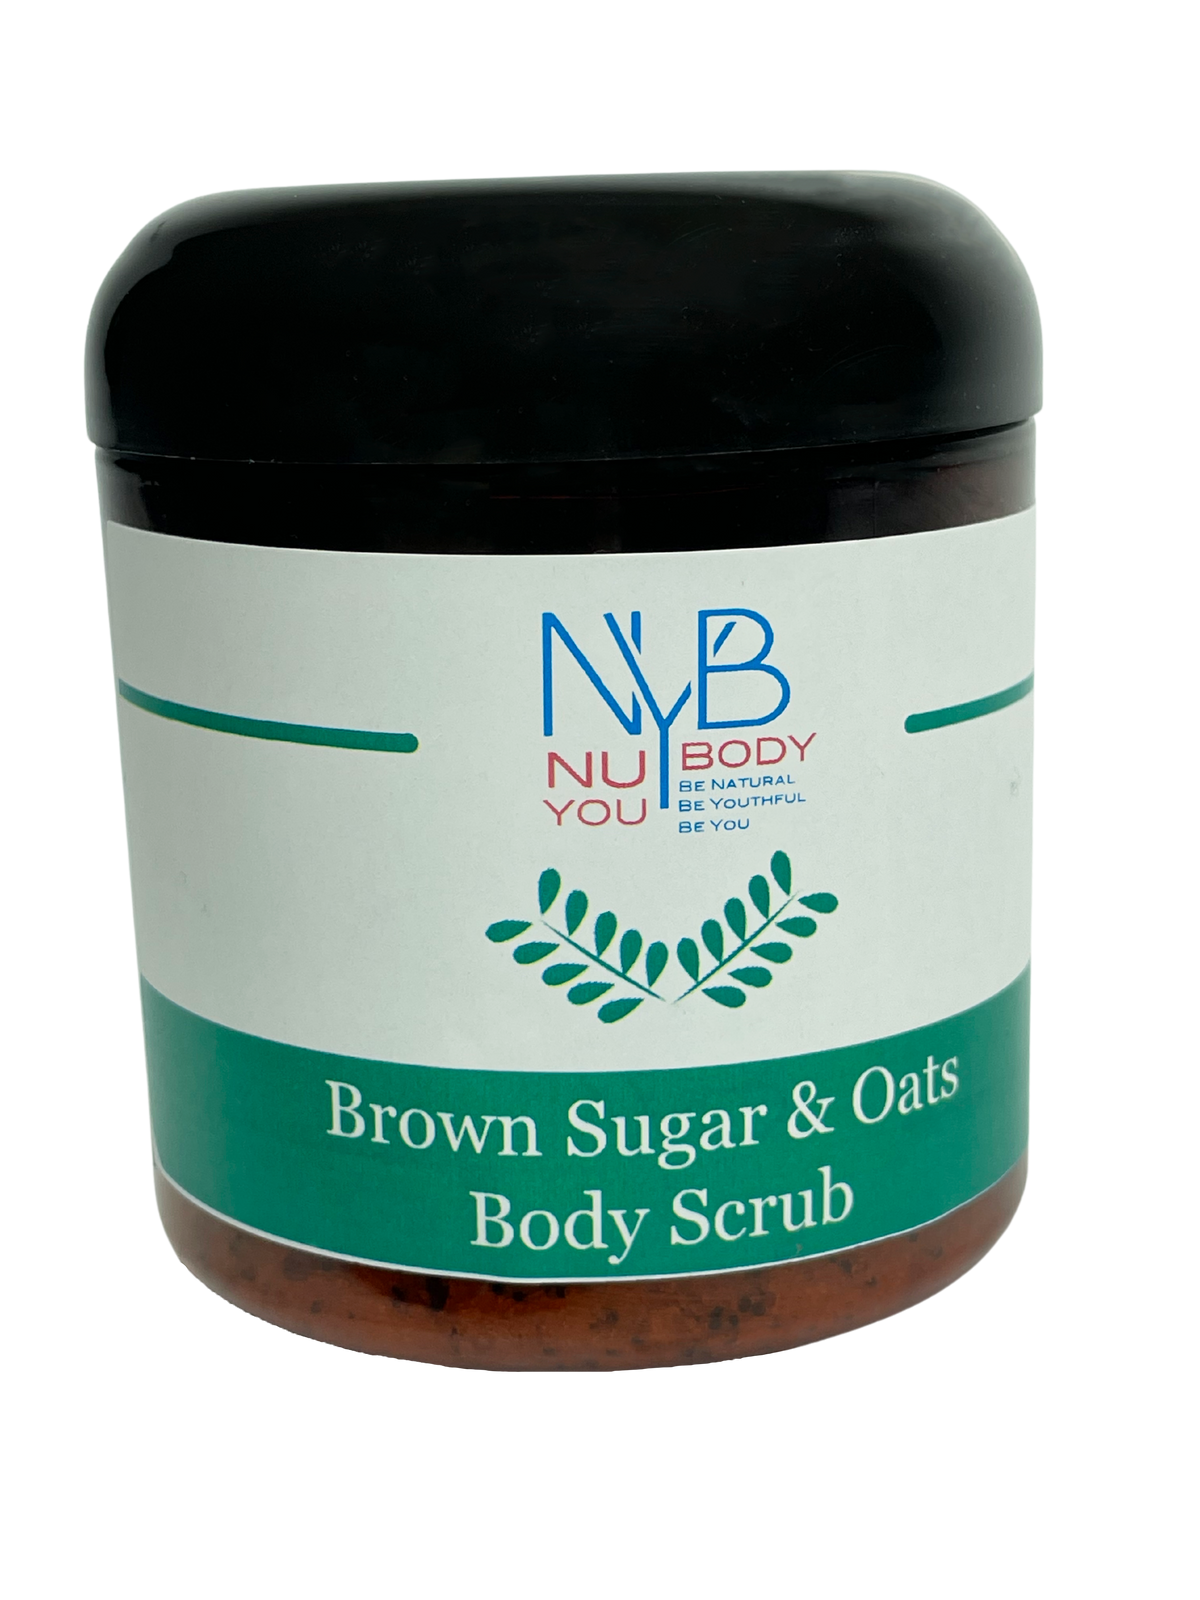 Brown Sugar & Oats Body Scrub